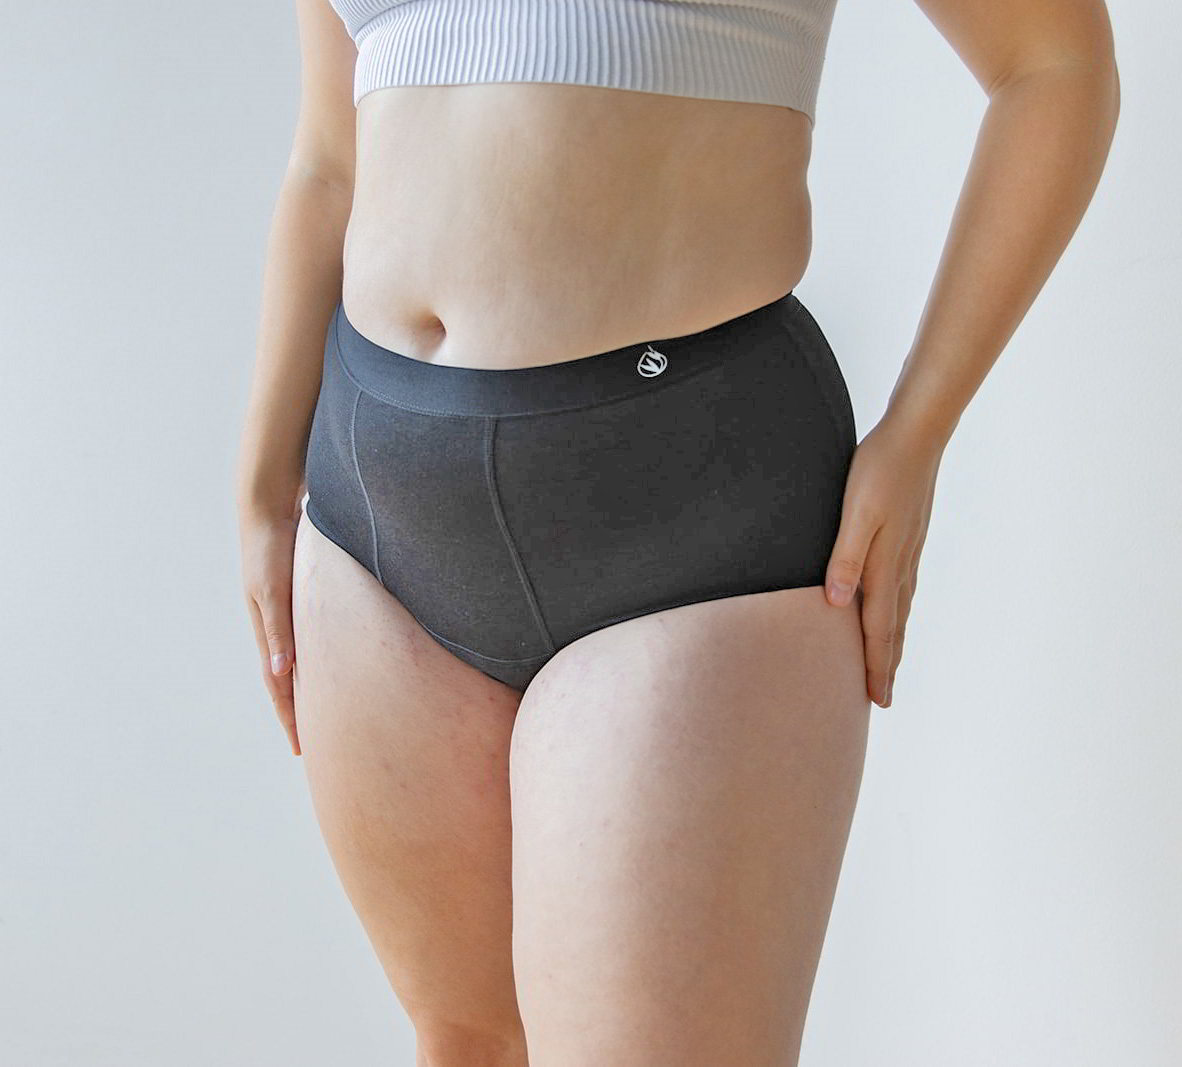 Period Underwear For Women,Women's Underwear High Waisted Cotton Briefs  Stretch Panties Soft Full Coverage Underpants(L,Black) 